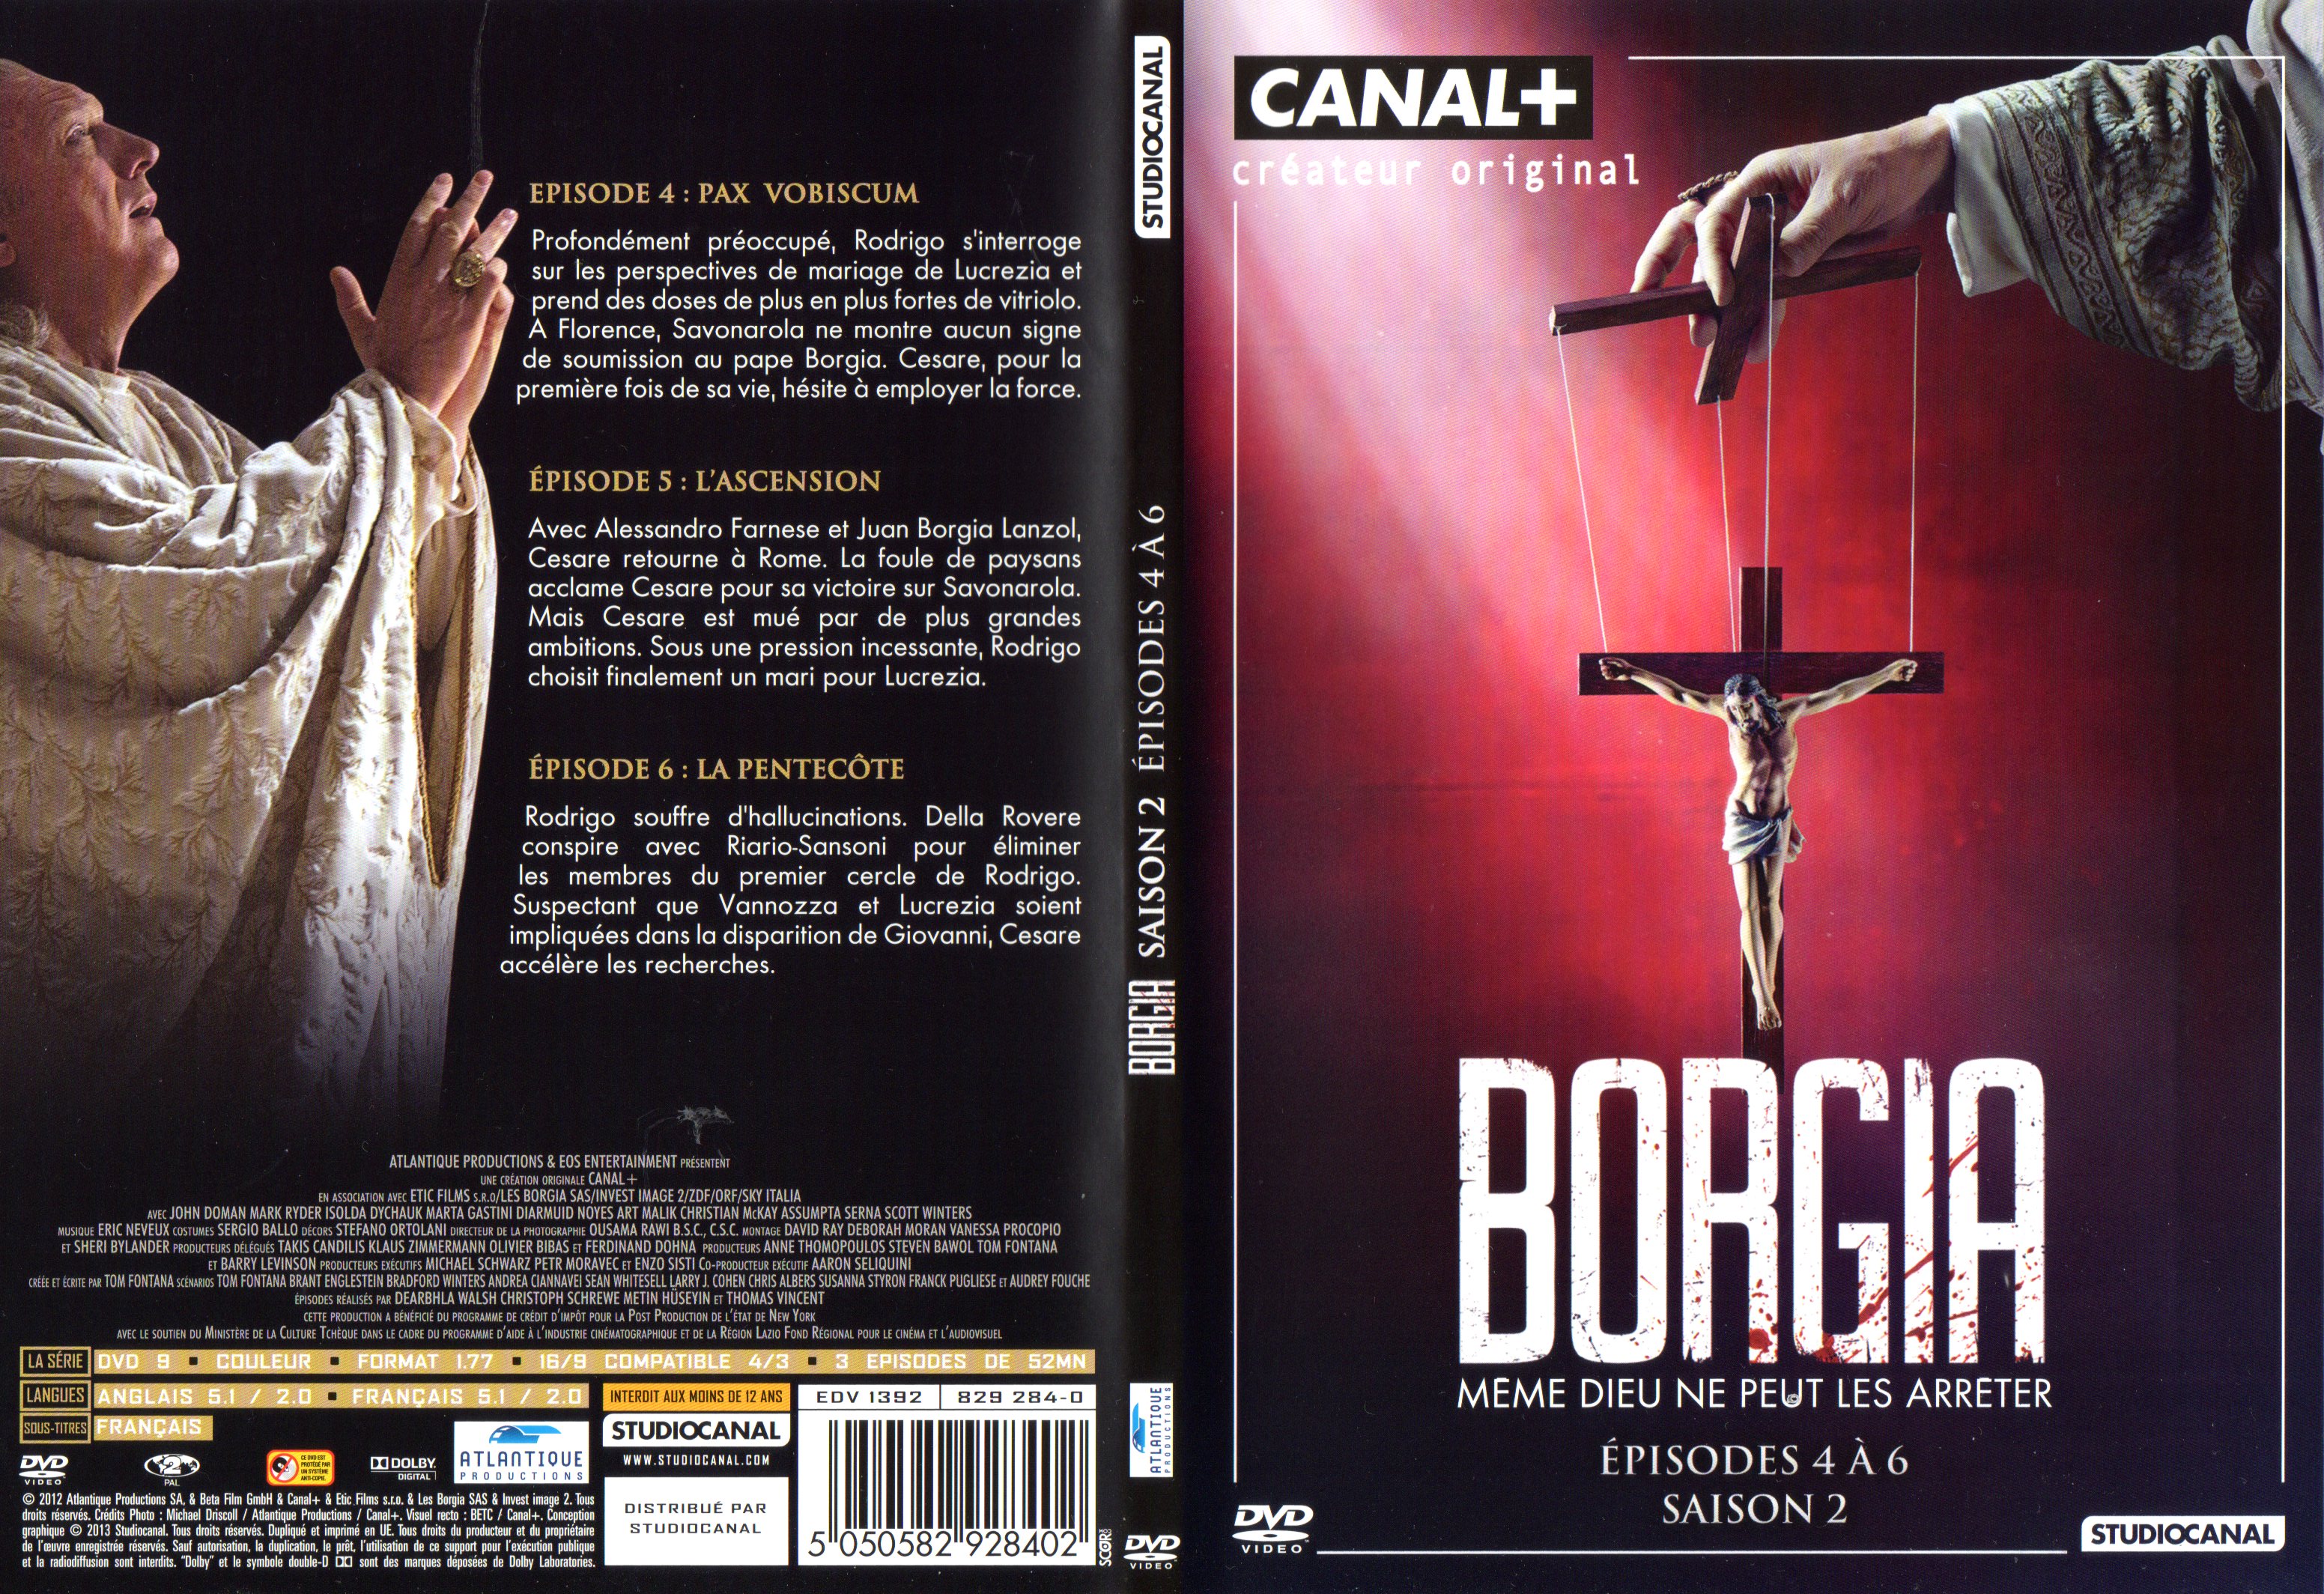 Jaquette DVD Borgia Saison 2 DVD 2